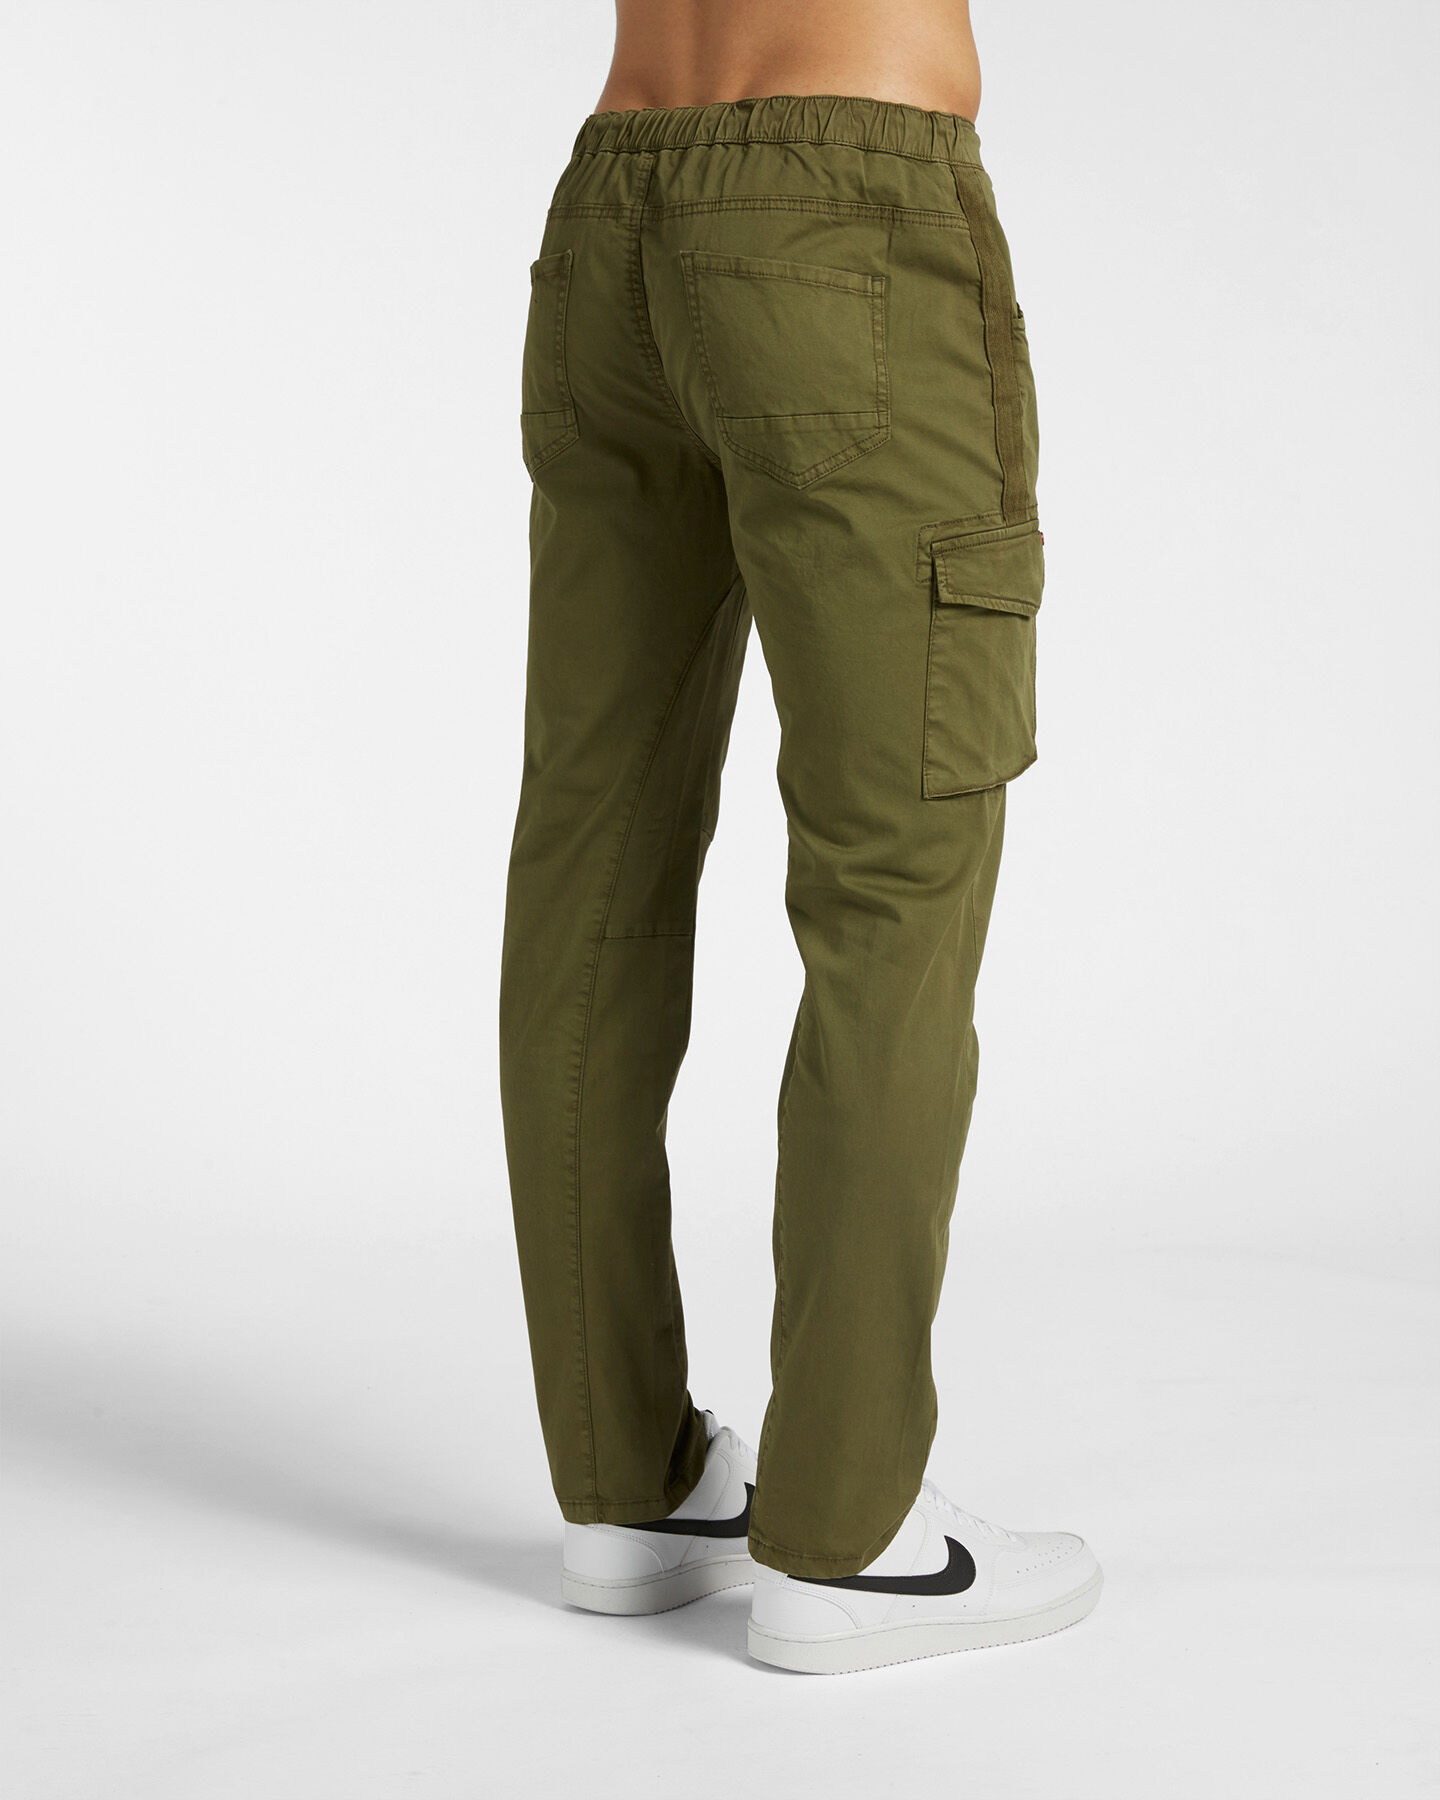  Pantalone MISTRAL URBAN BASIC M S4118801|800|46 scatto 1